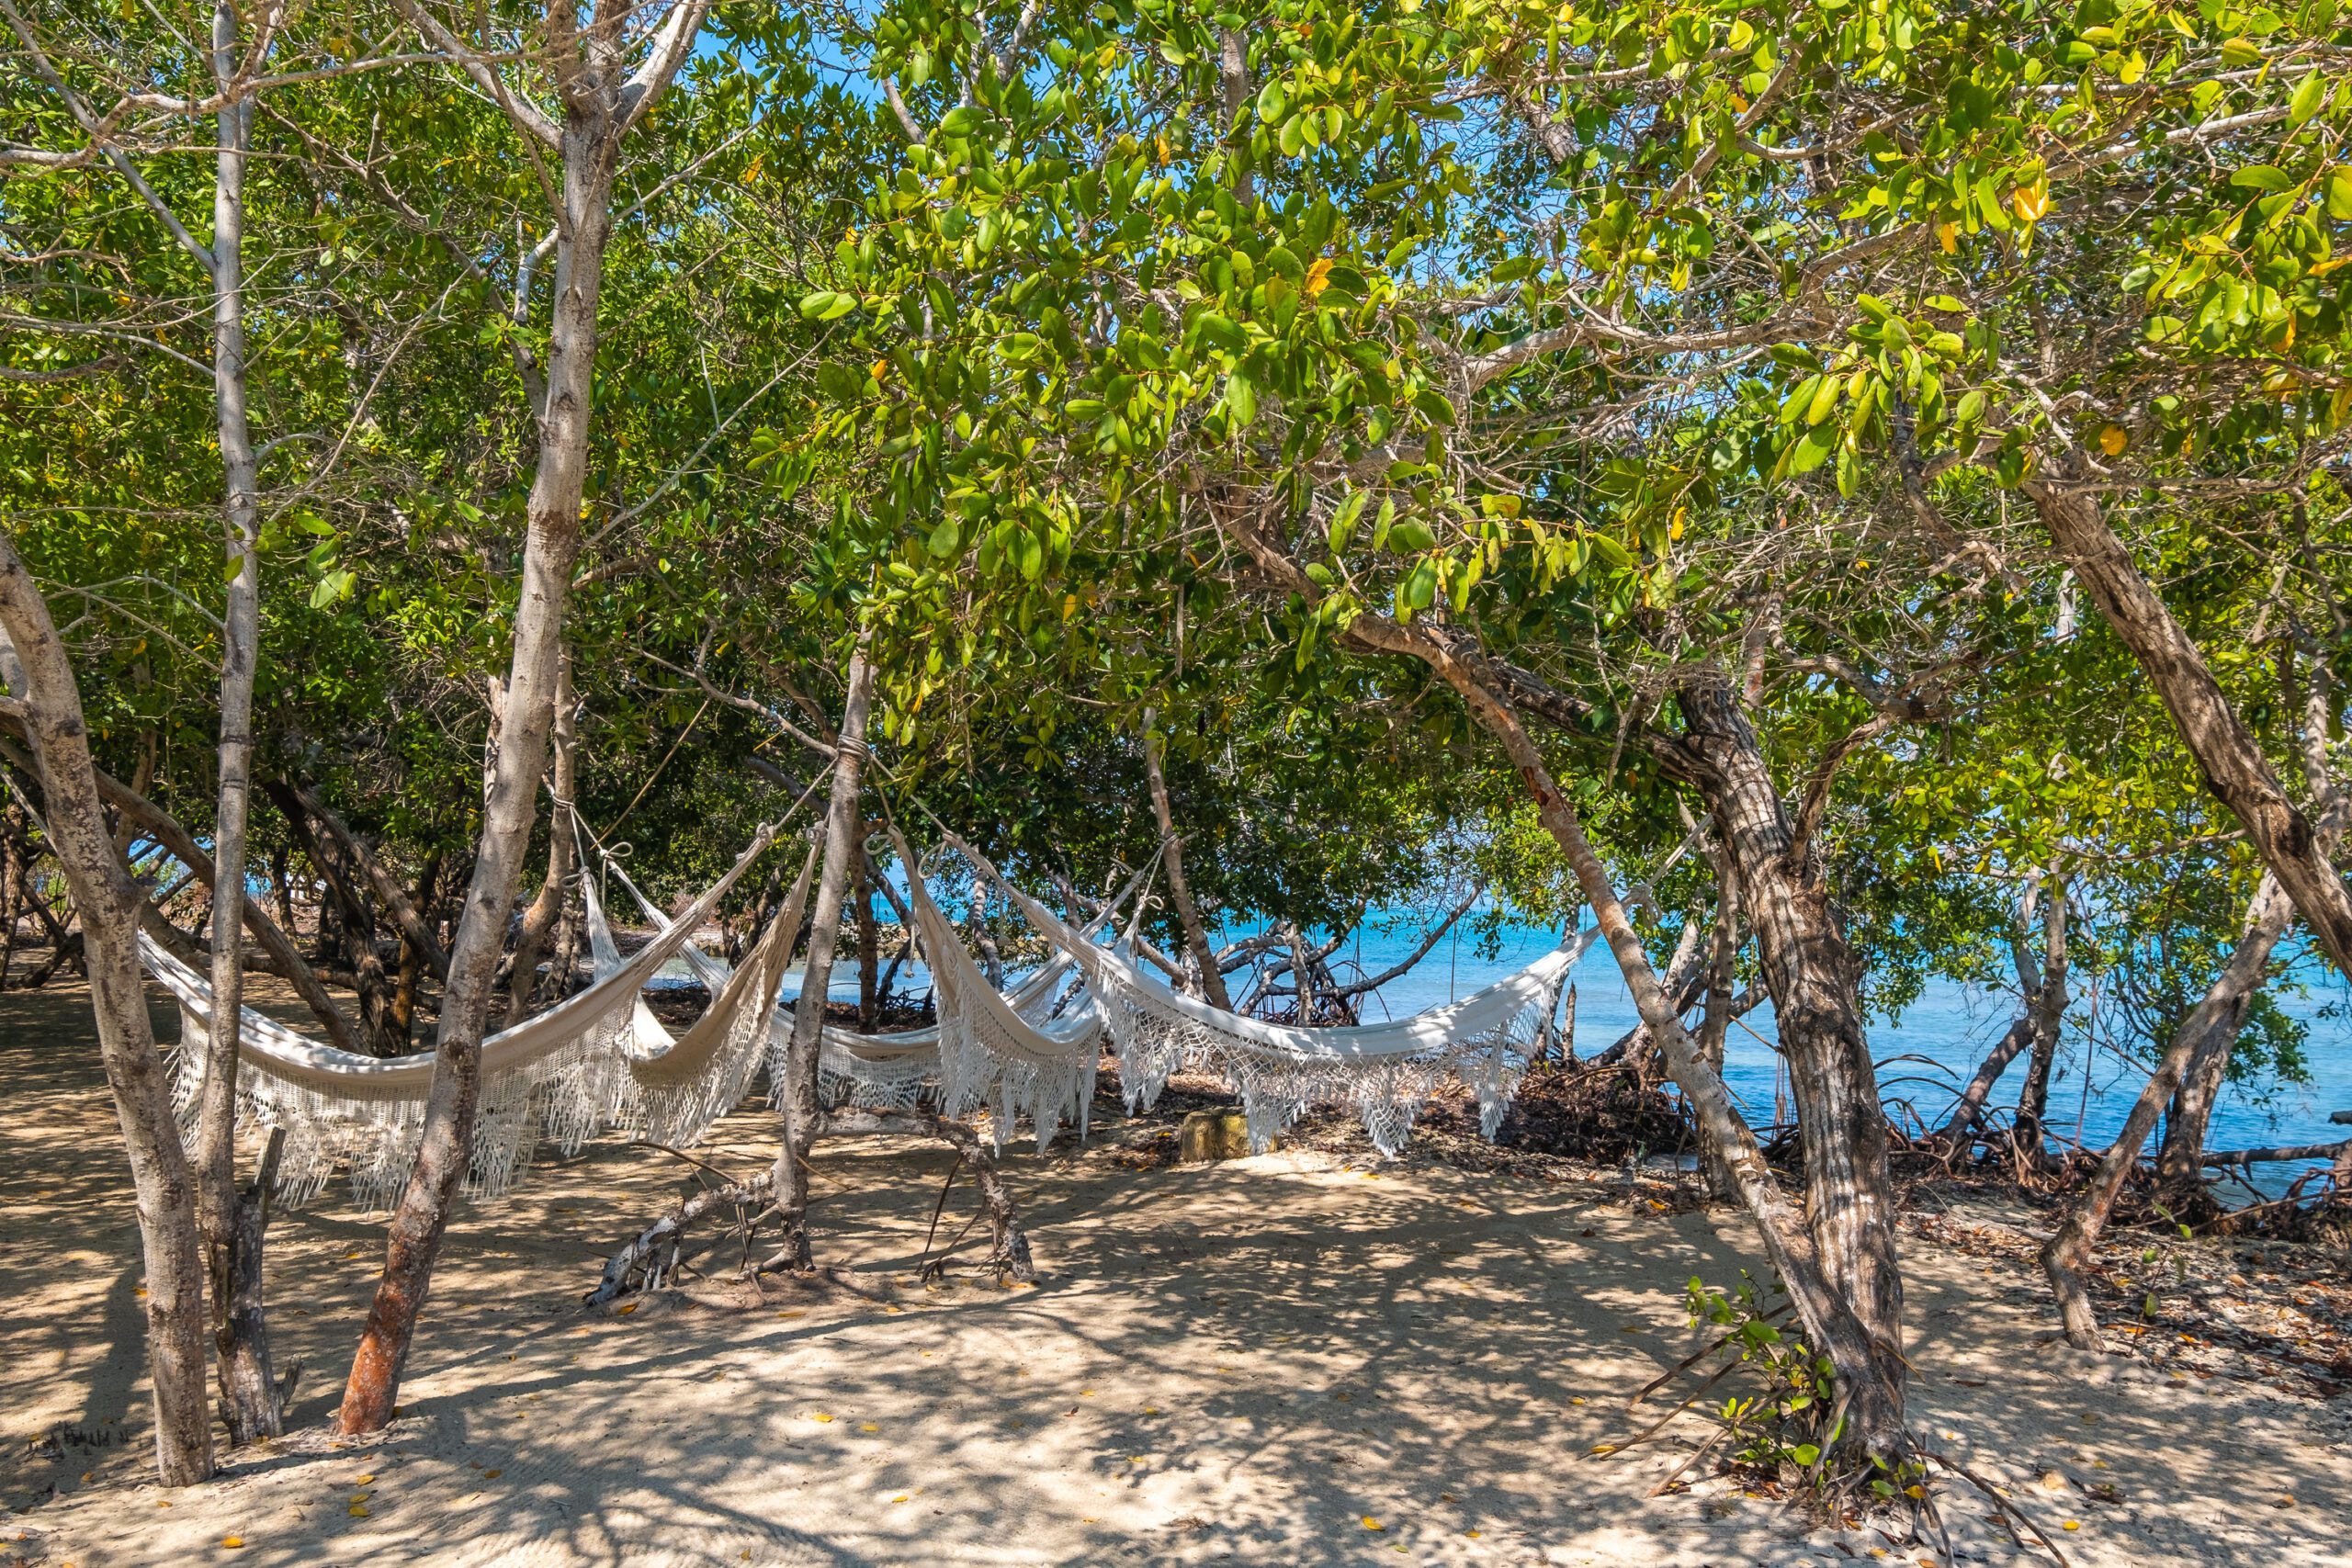 a hammock set up on a sandy beach.